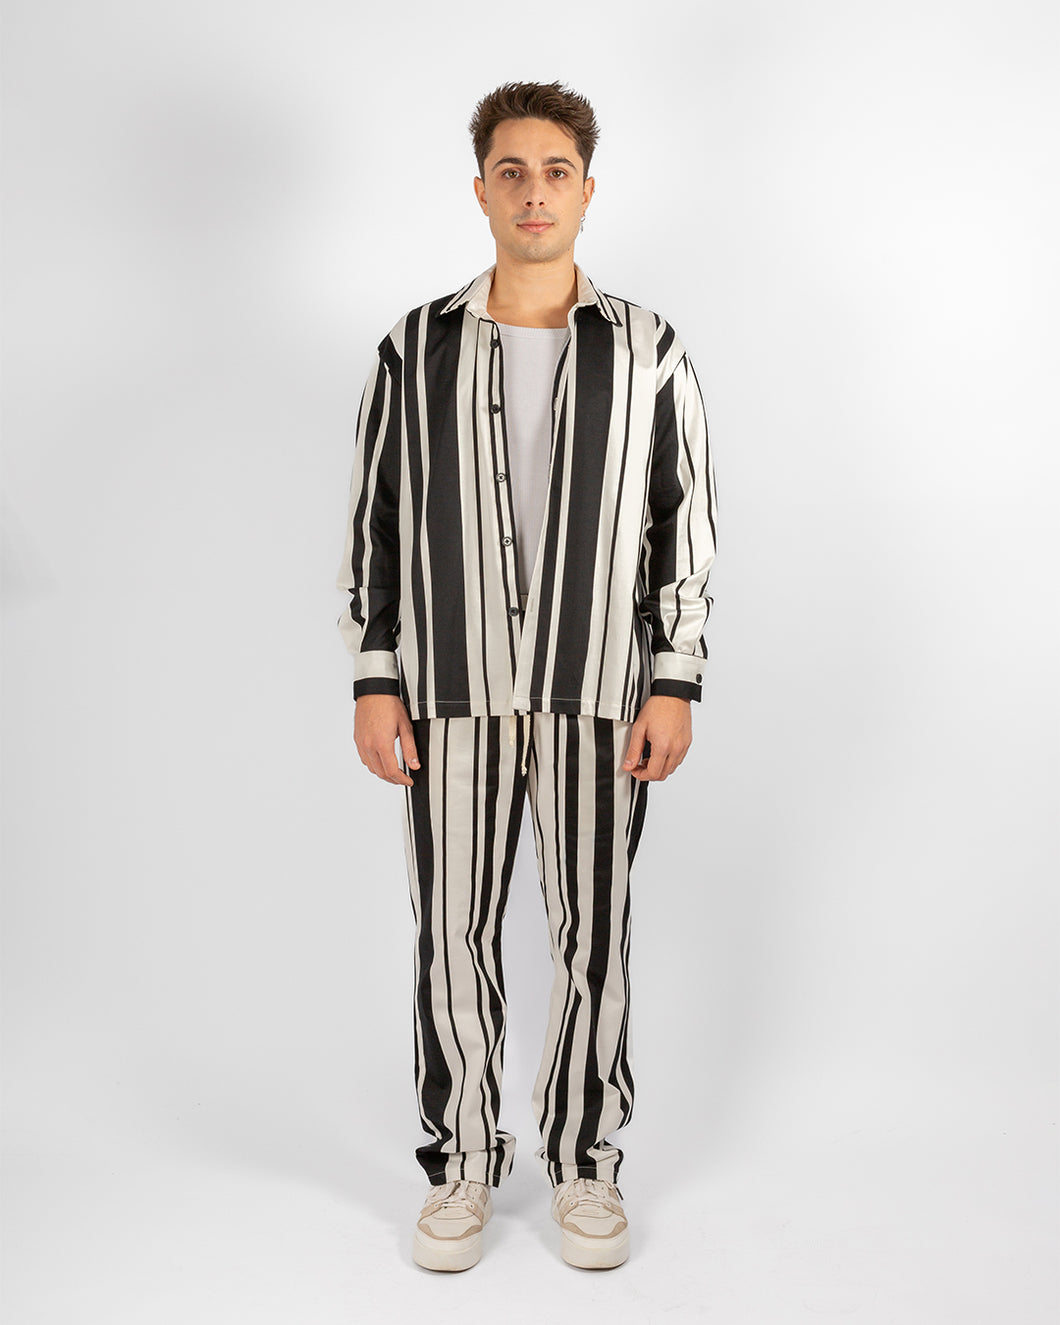 Unisex Striped Black And White Cotton Urban Pyjamas